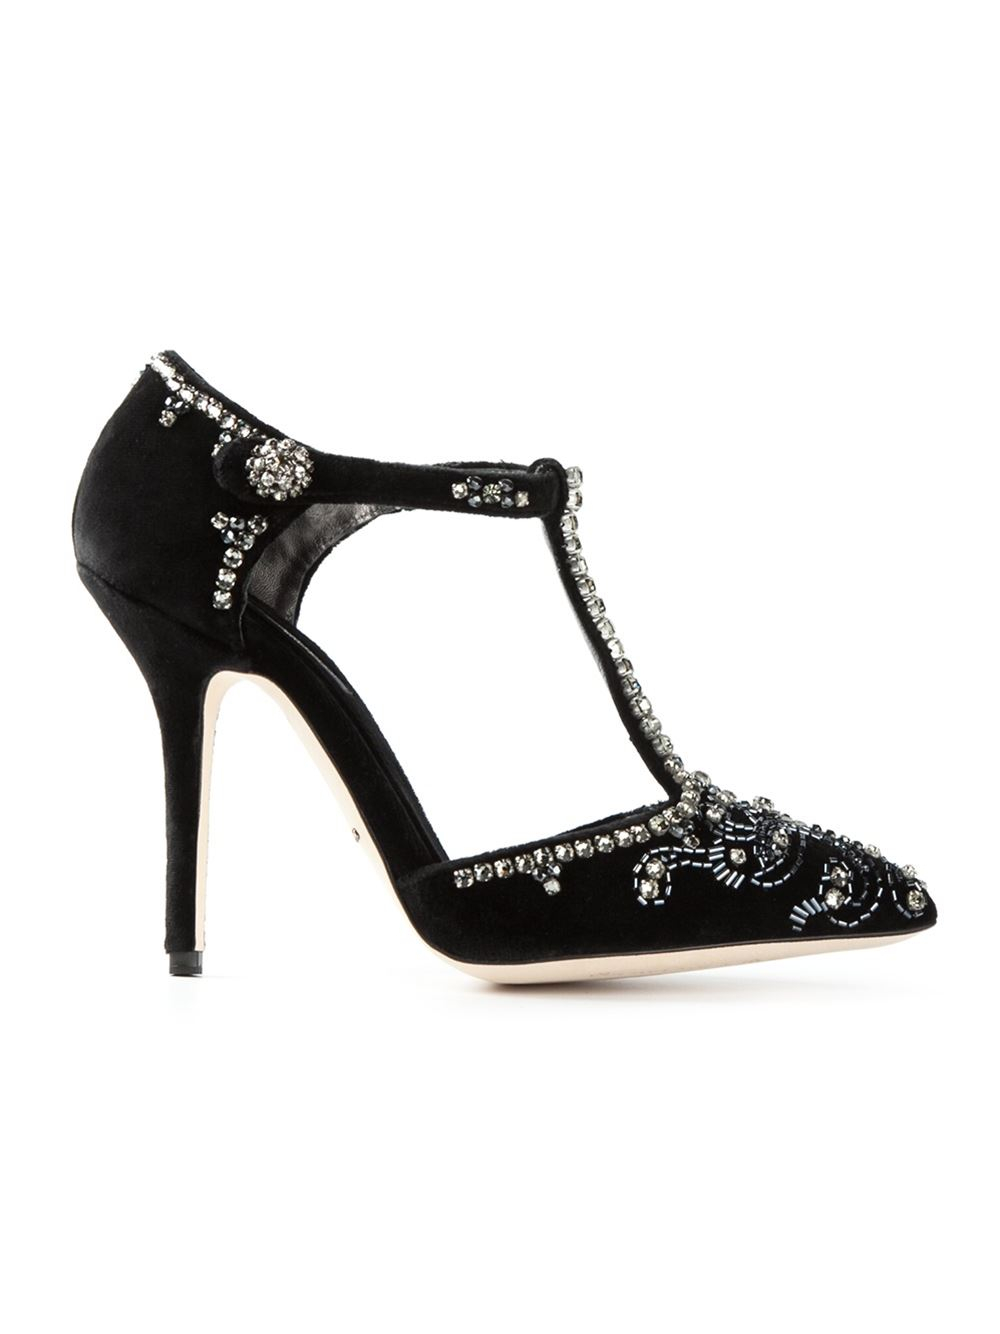 Dolce & Gabbana Velvet 'Bellucci' Pumps in Black | Lyst